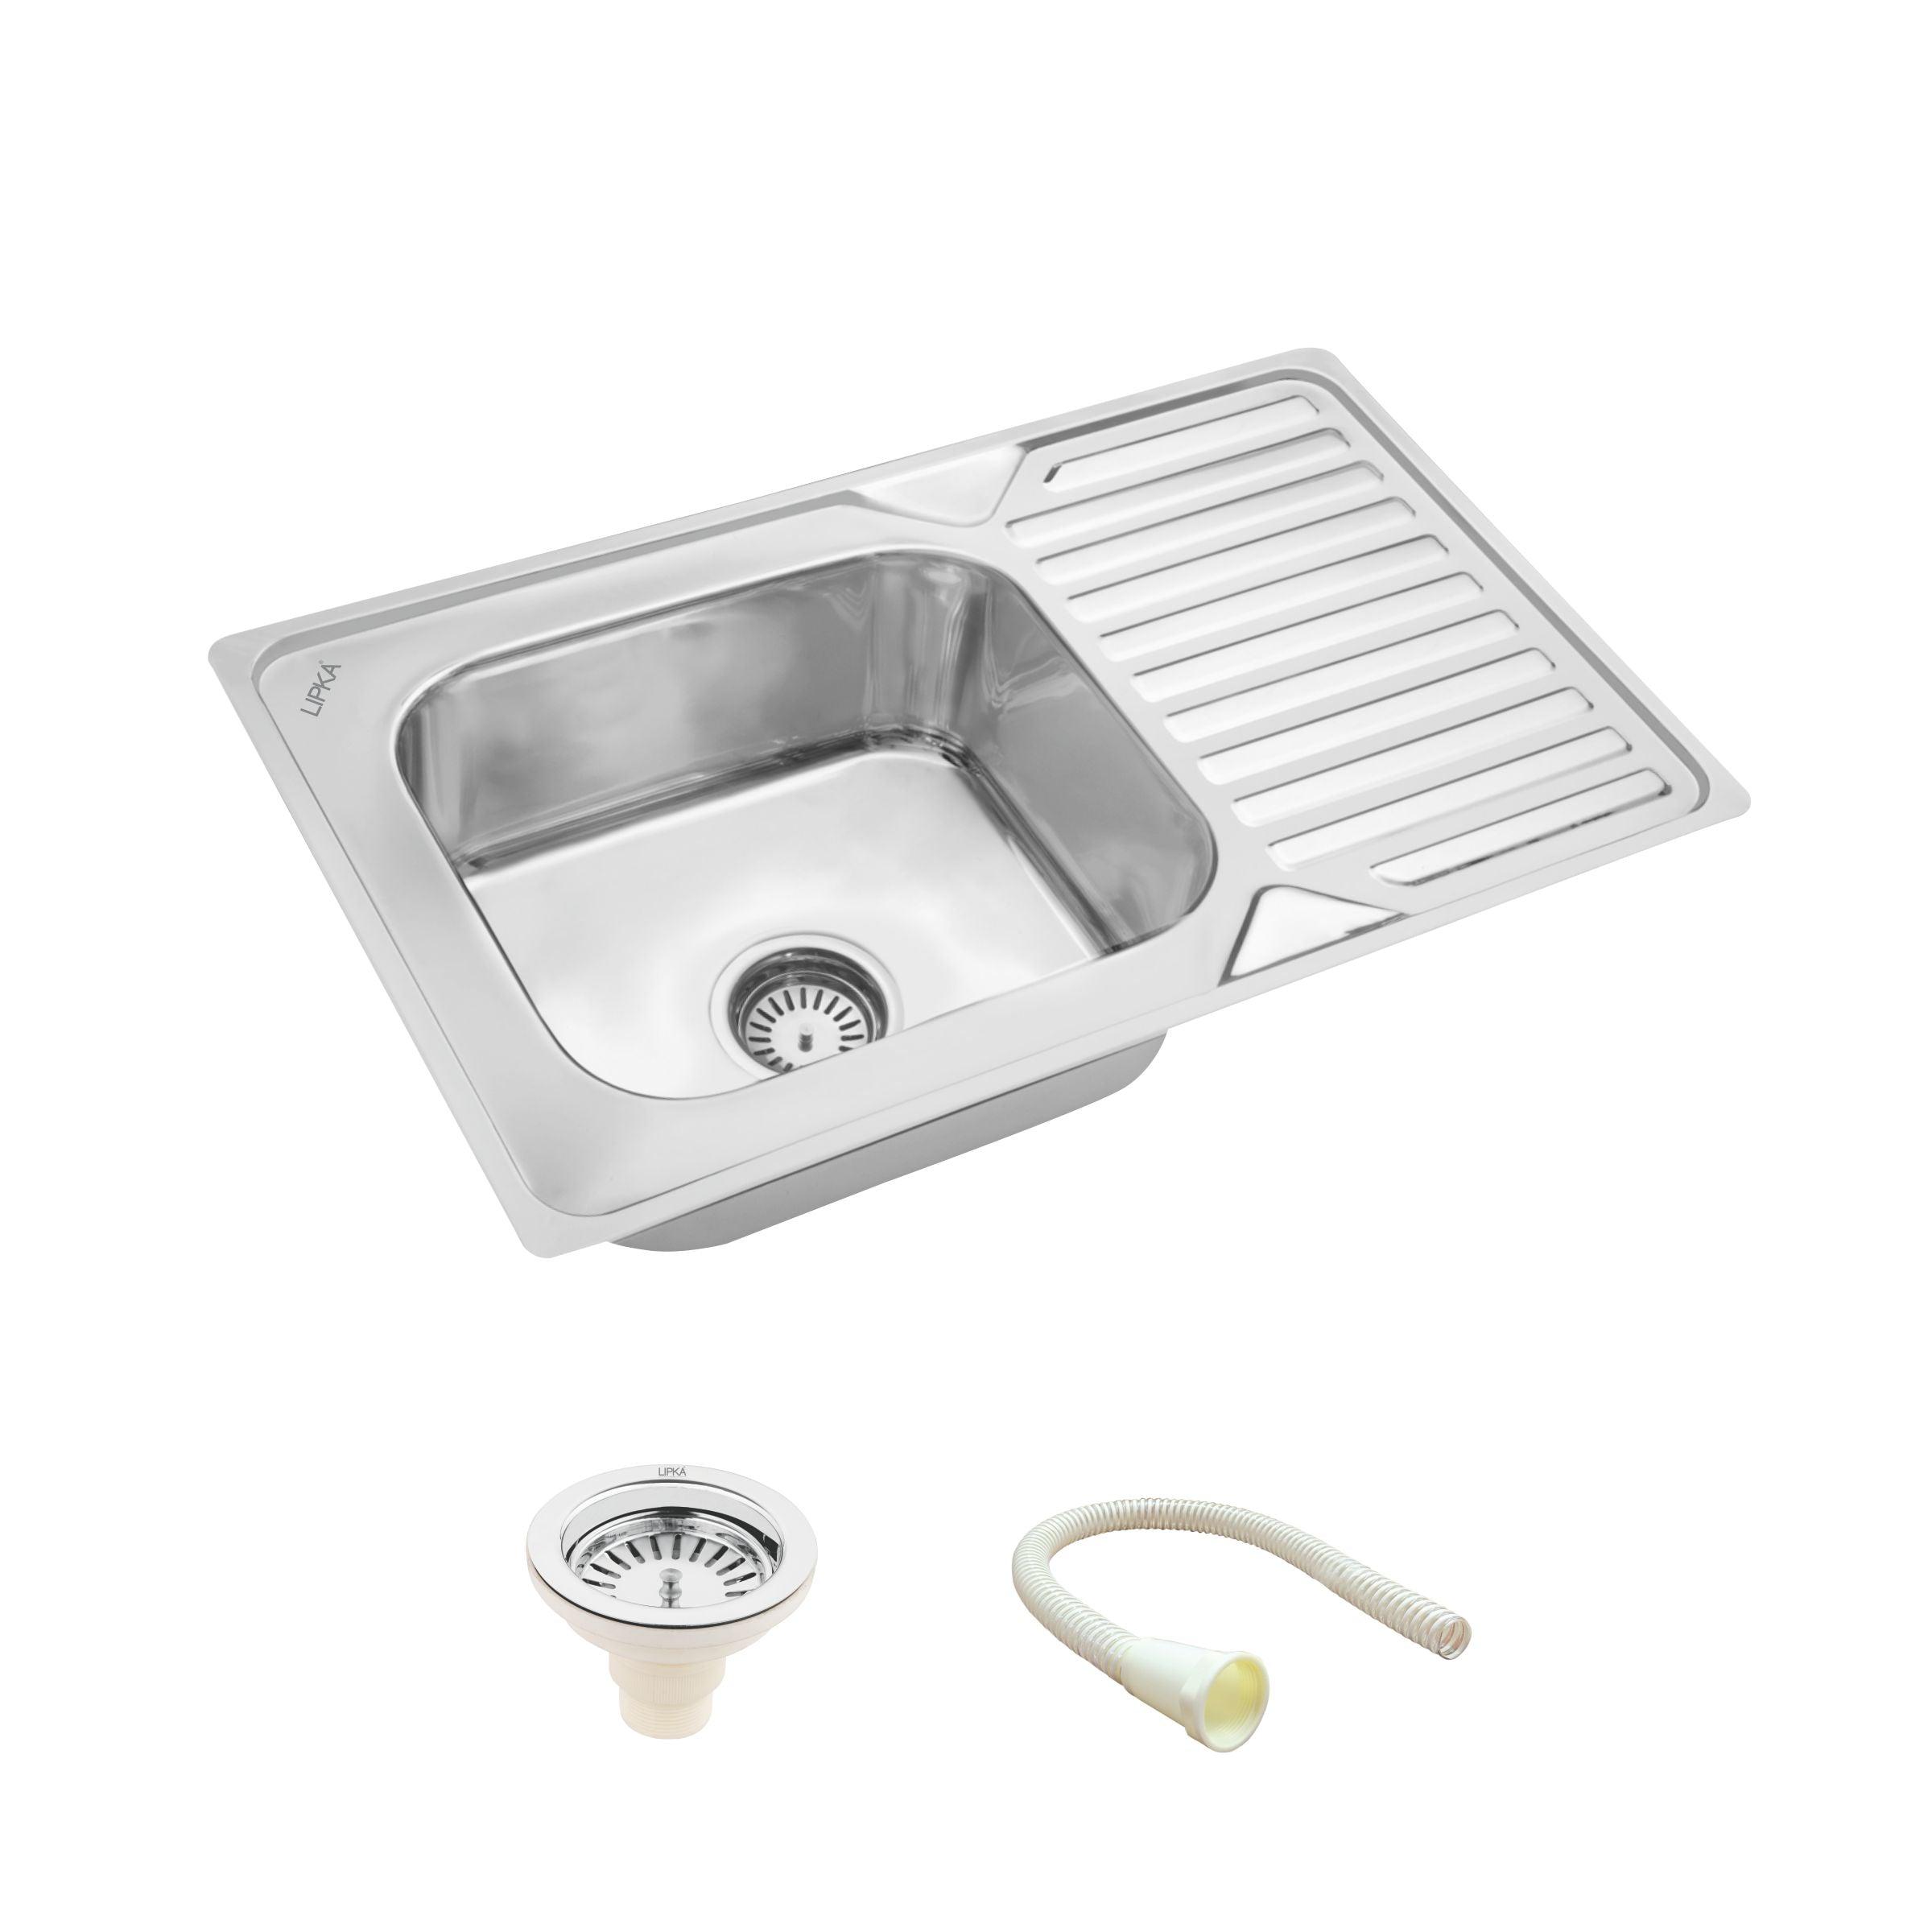 Square Single Bowl 304-Grade Kitchen Sink with Drainboard (32 x 20 x 8 Inches) - LIPKA - Lipka Home